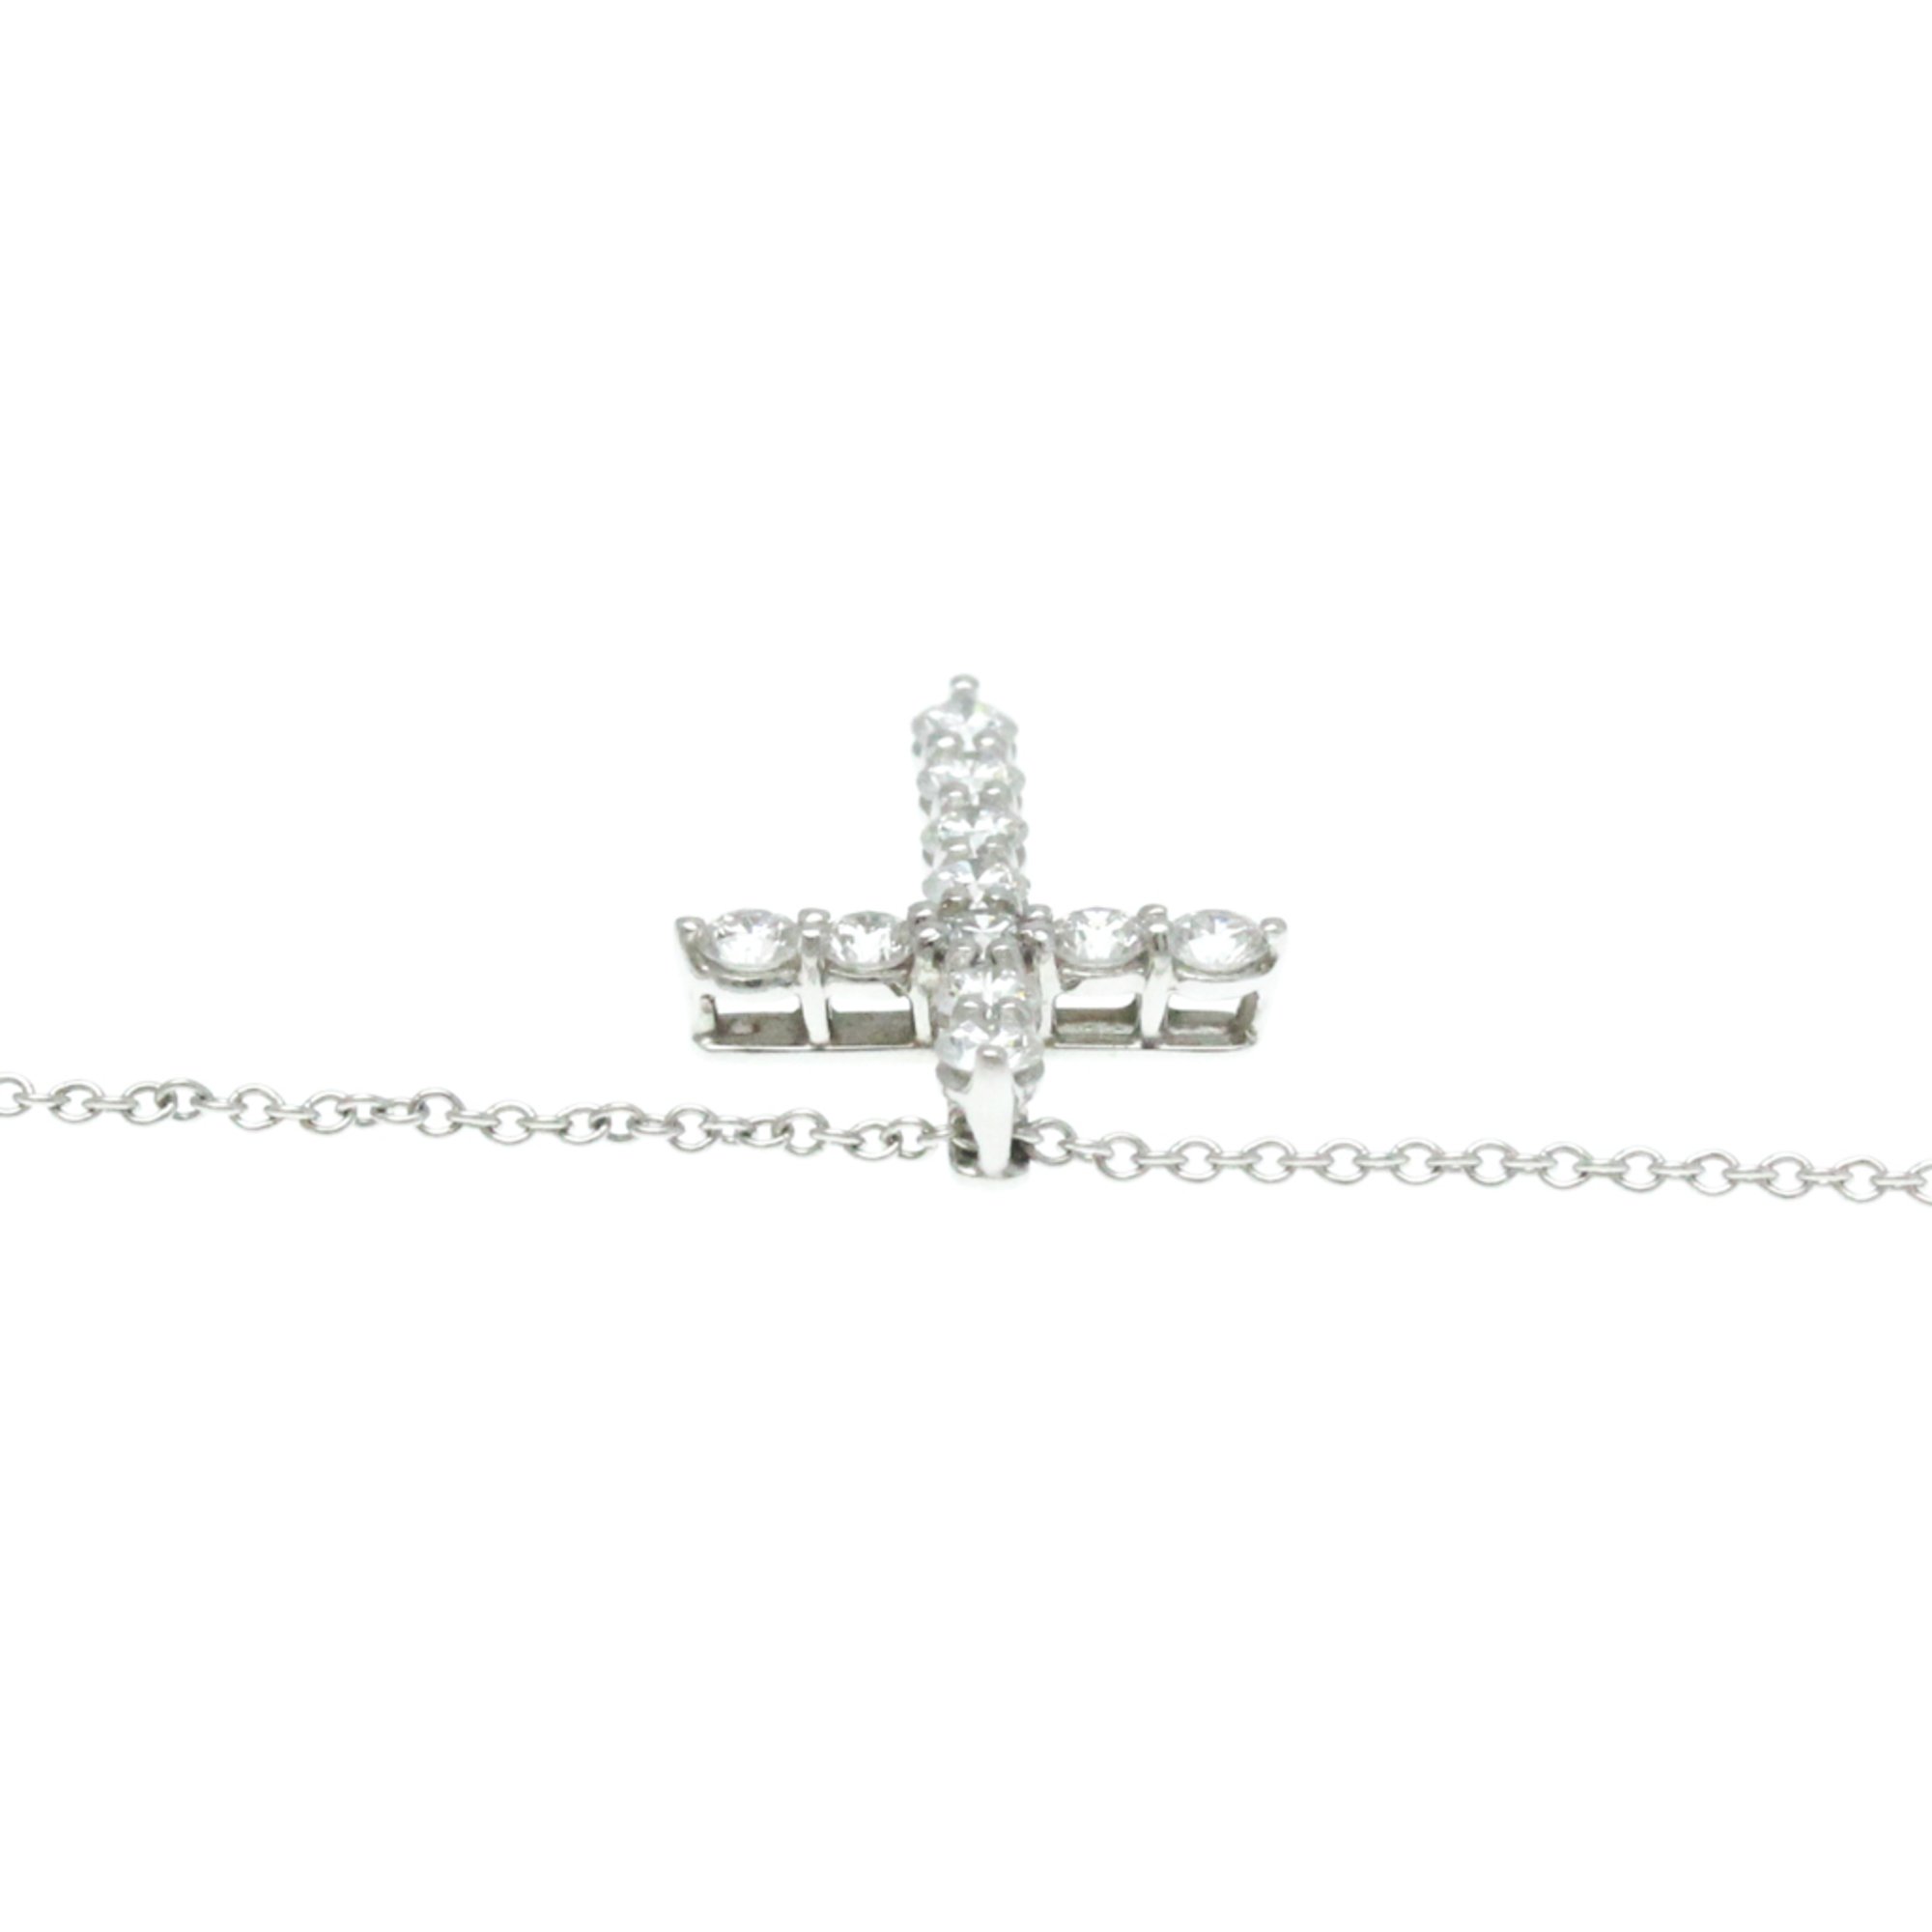 Tiffany Small Cross Necklace Platinum Diamond Men,Women Fashion Pendant Necklace (Silver)